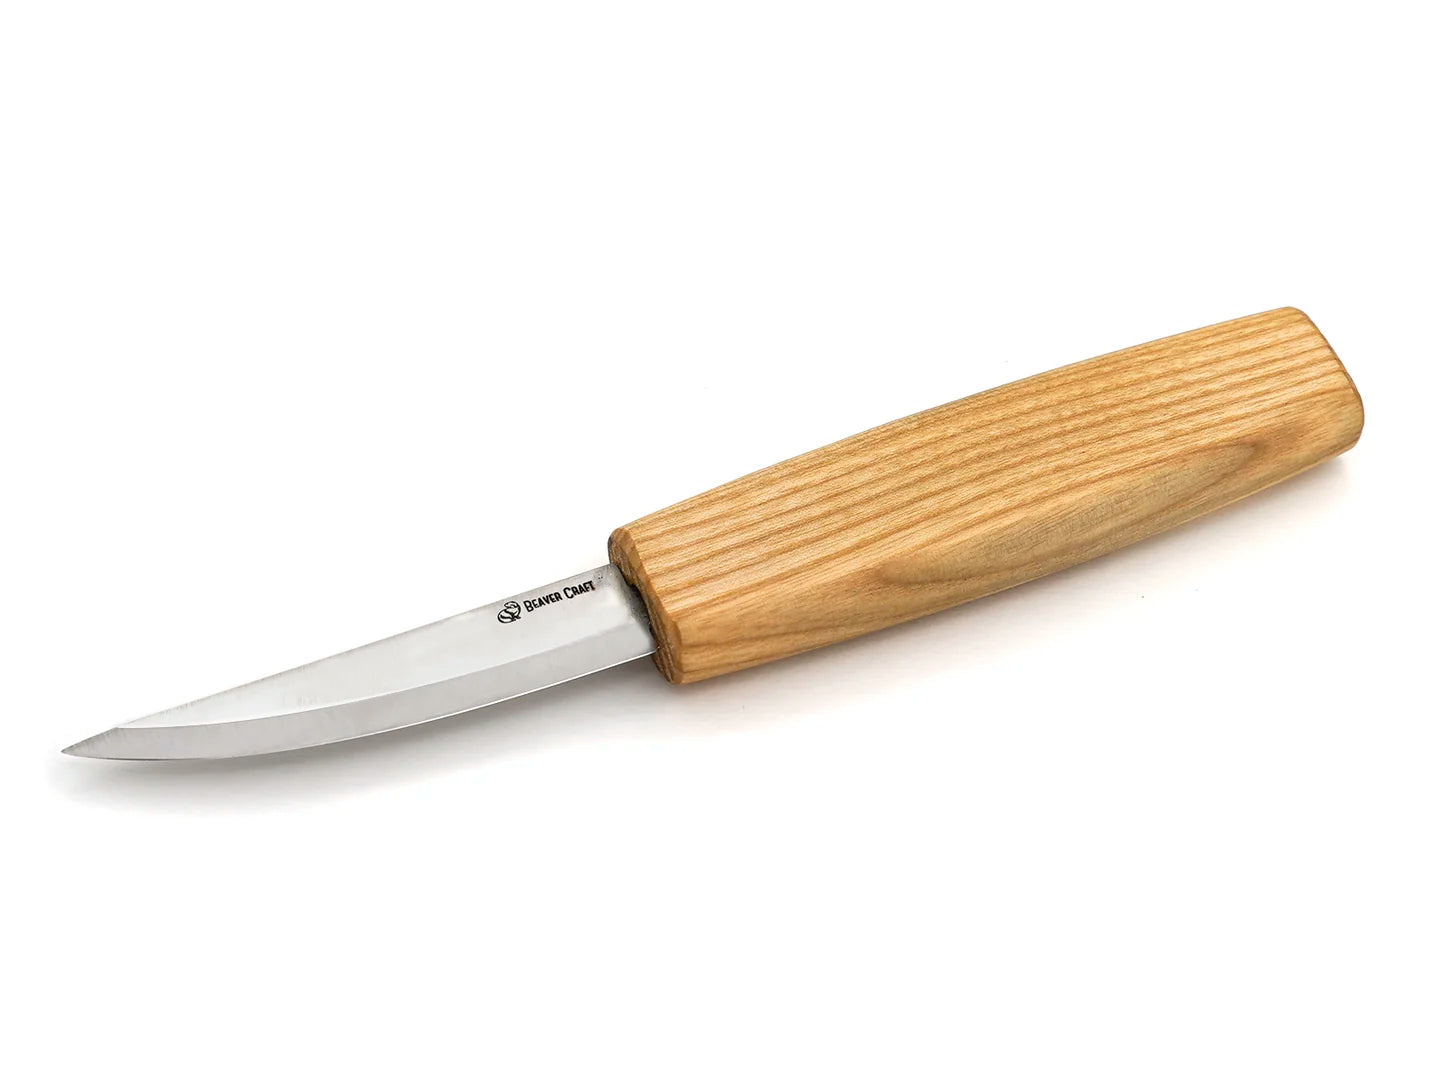 Beaver Craft Skew Knife Hummul Carving Company